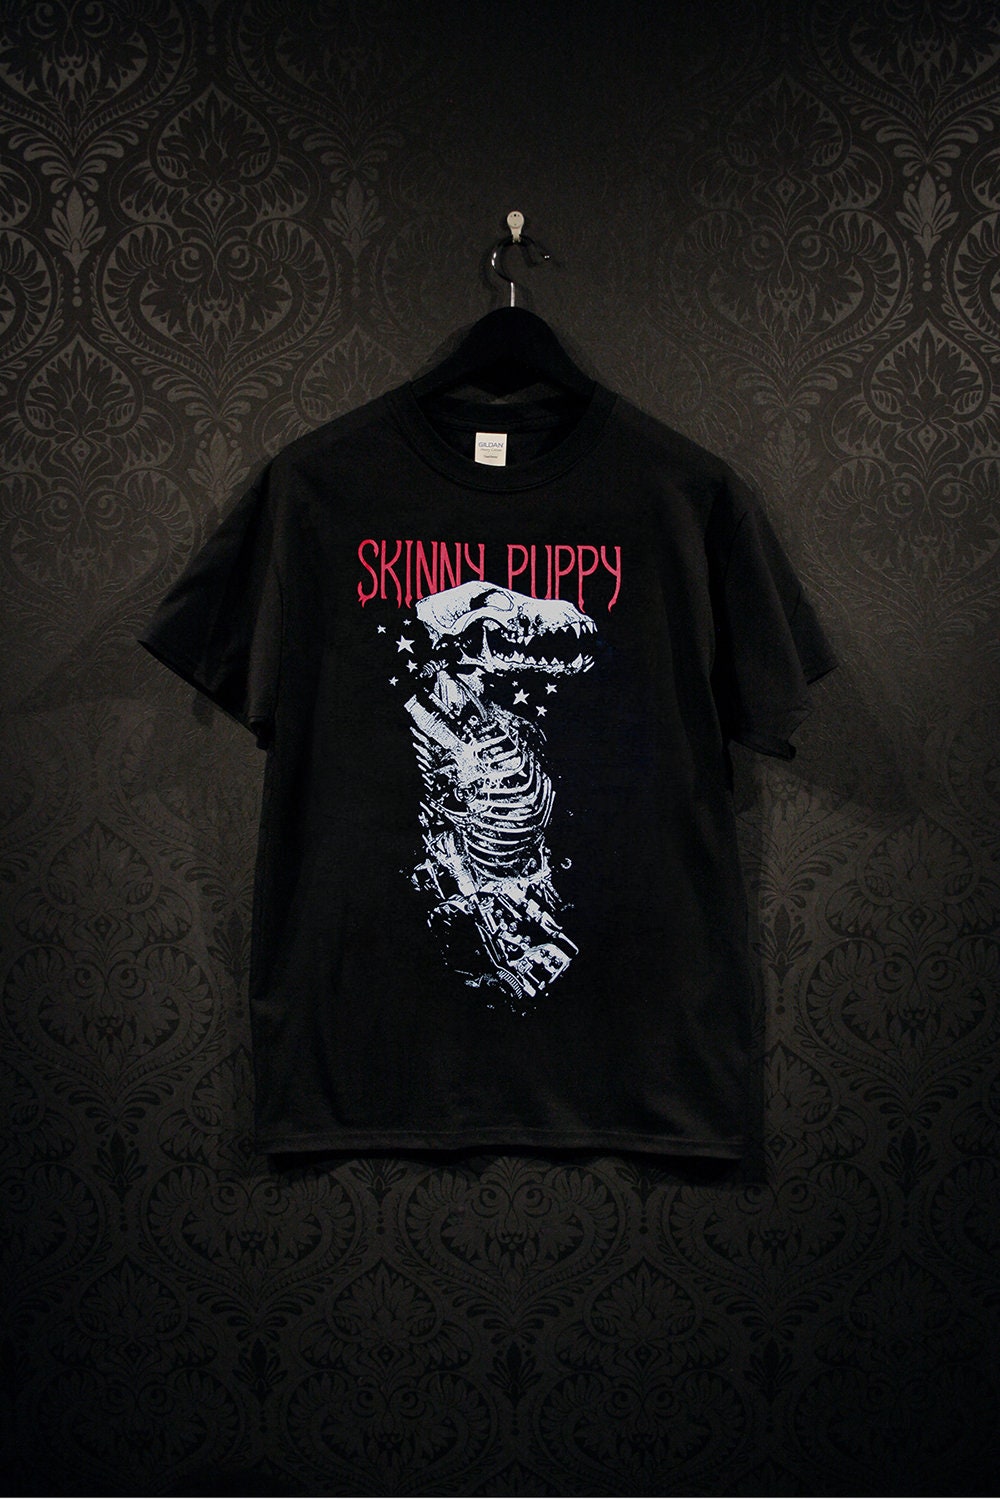 Skinny Puppy, official merchandise, contest winner - T-shirt